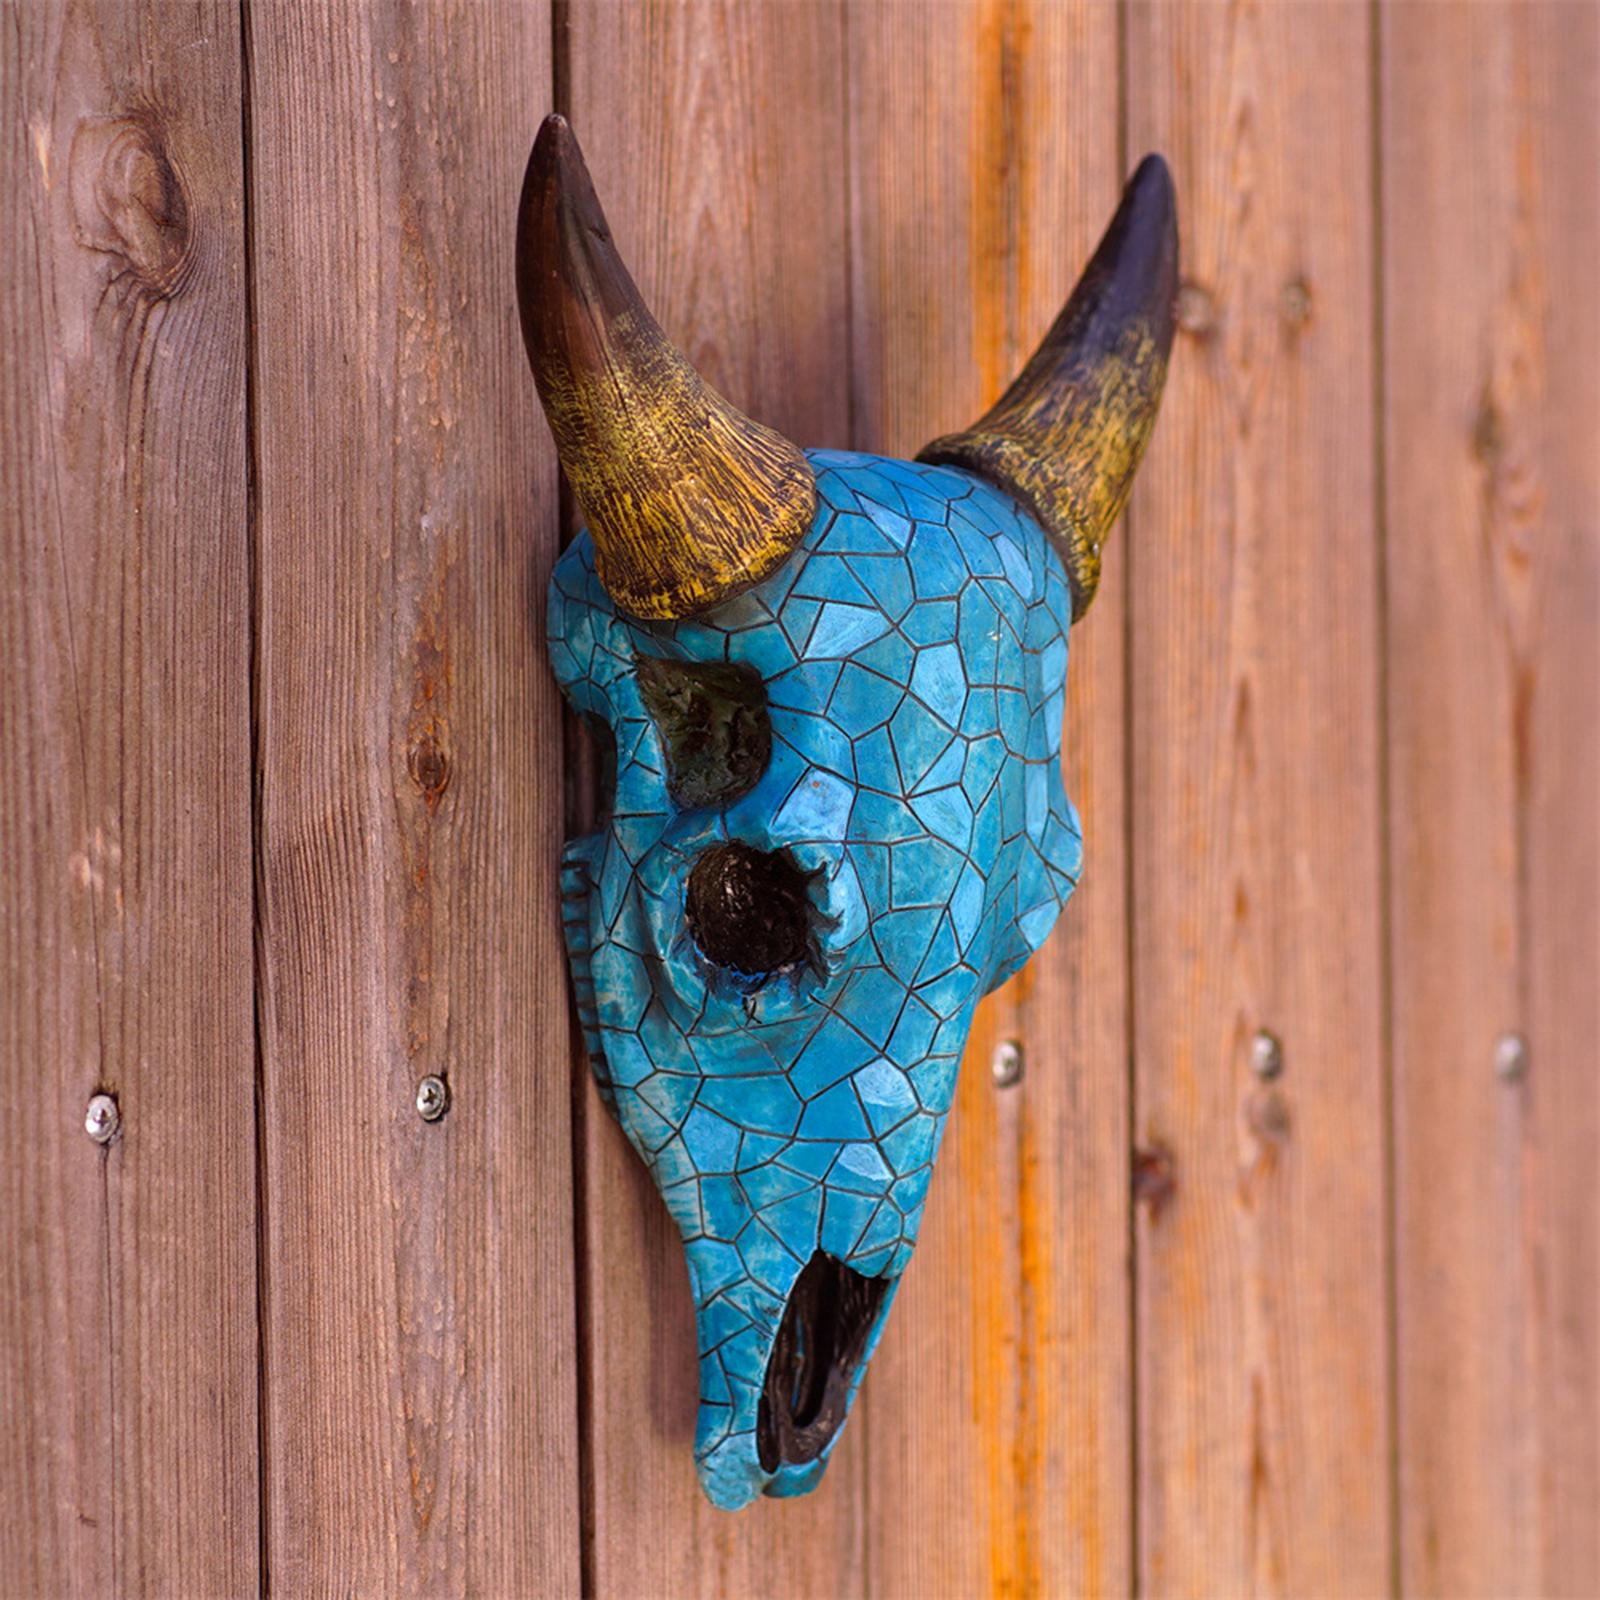 Bull Head Skull Sculpture Wall Decor Art Crafts Ornaments for Bars Farmhouse